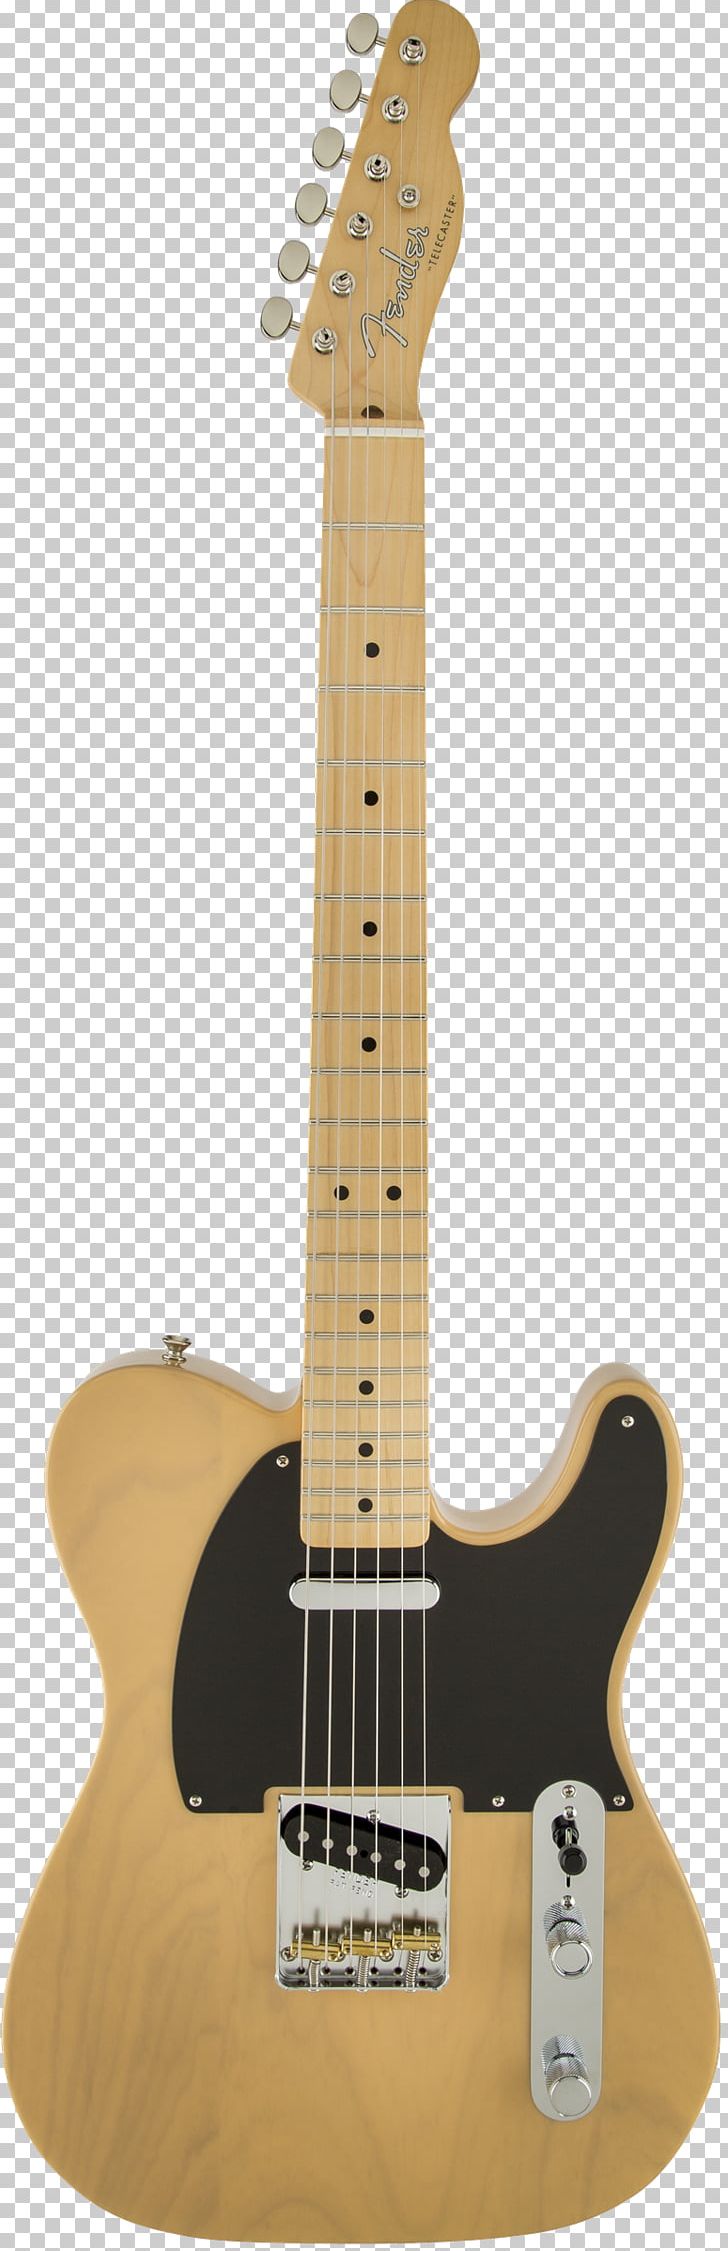 Fender Telecaster Thinline Fender Stratocaster Fender Musical Instruments Corporation Guitar PNG, Clipart, Acoustic Electric Guitar, Acoustic Guitar, Bass Guitar, Guitar, Guitar Accessory Free PNG Download